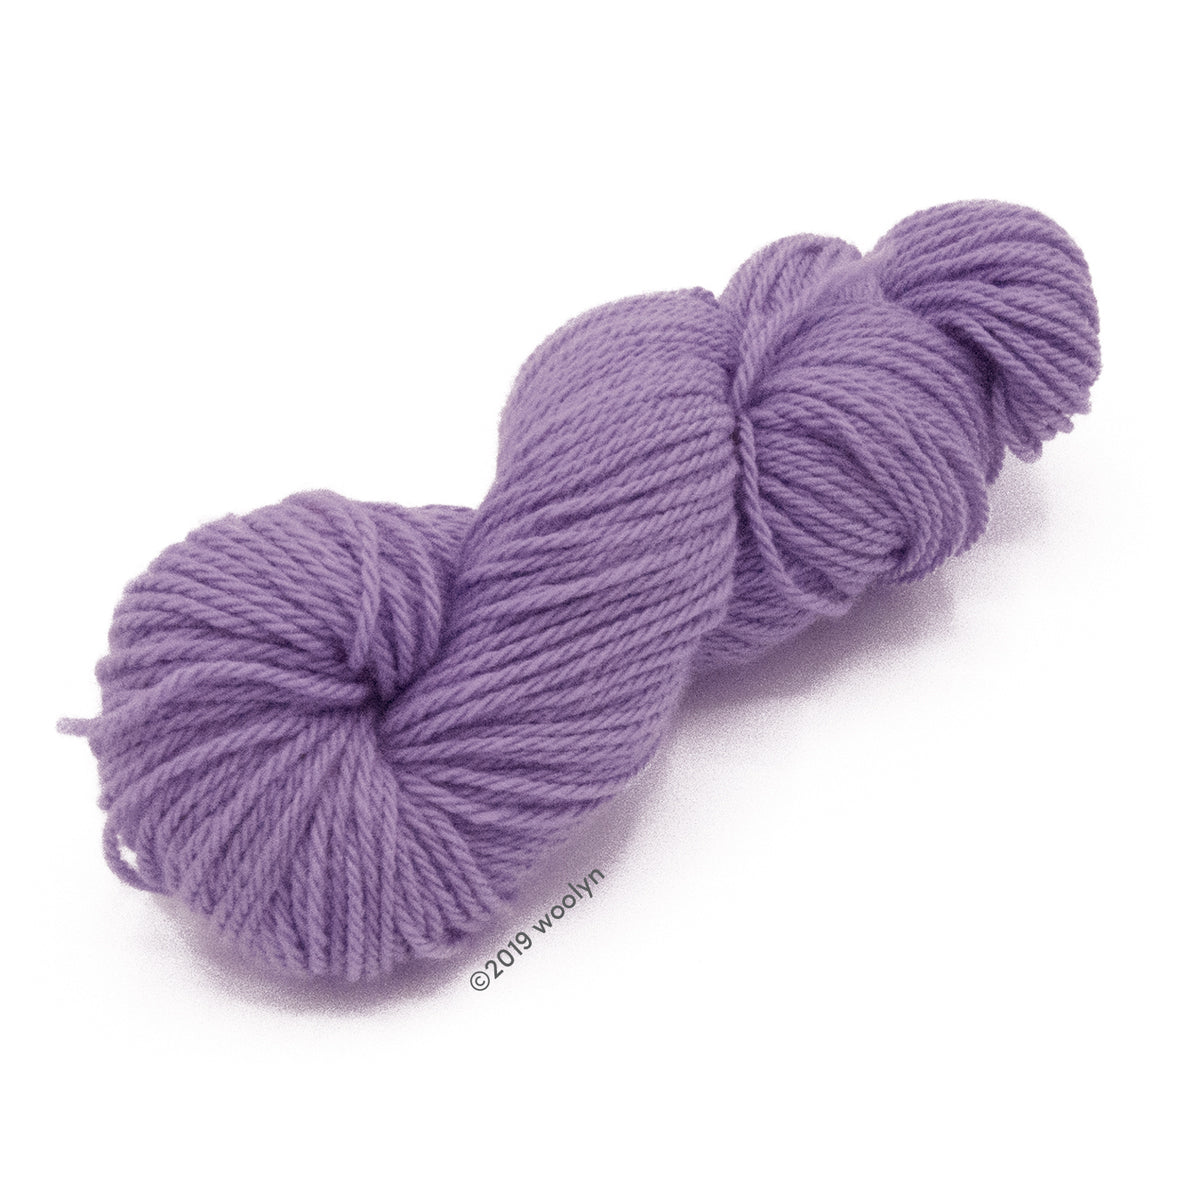 North Light Fibers Atlantic Lupine, a lavender color.